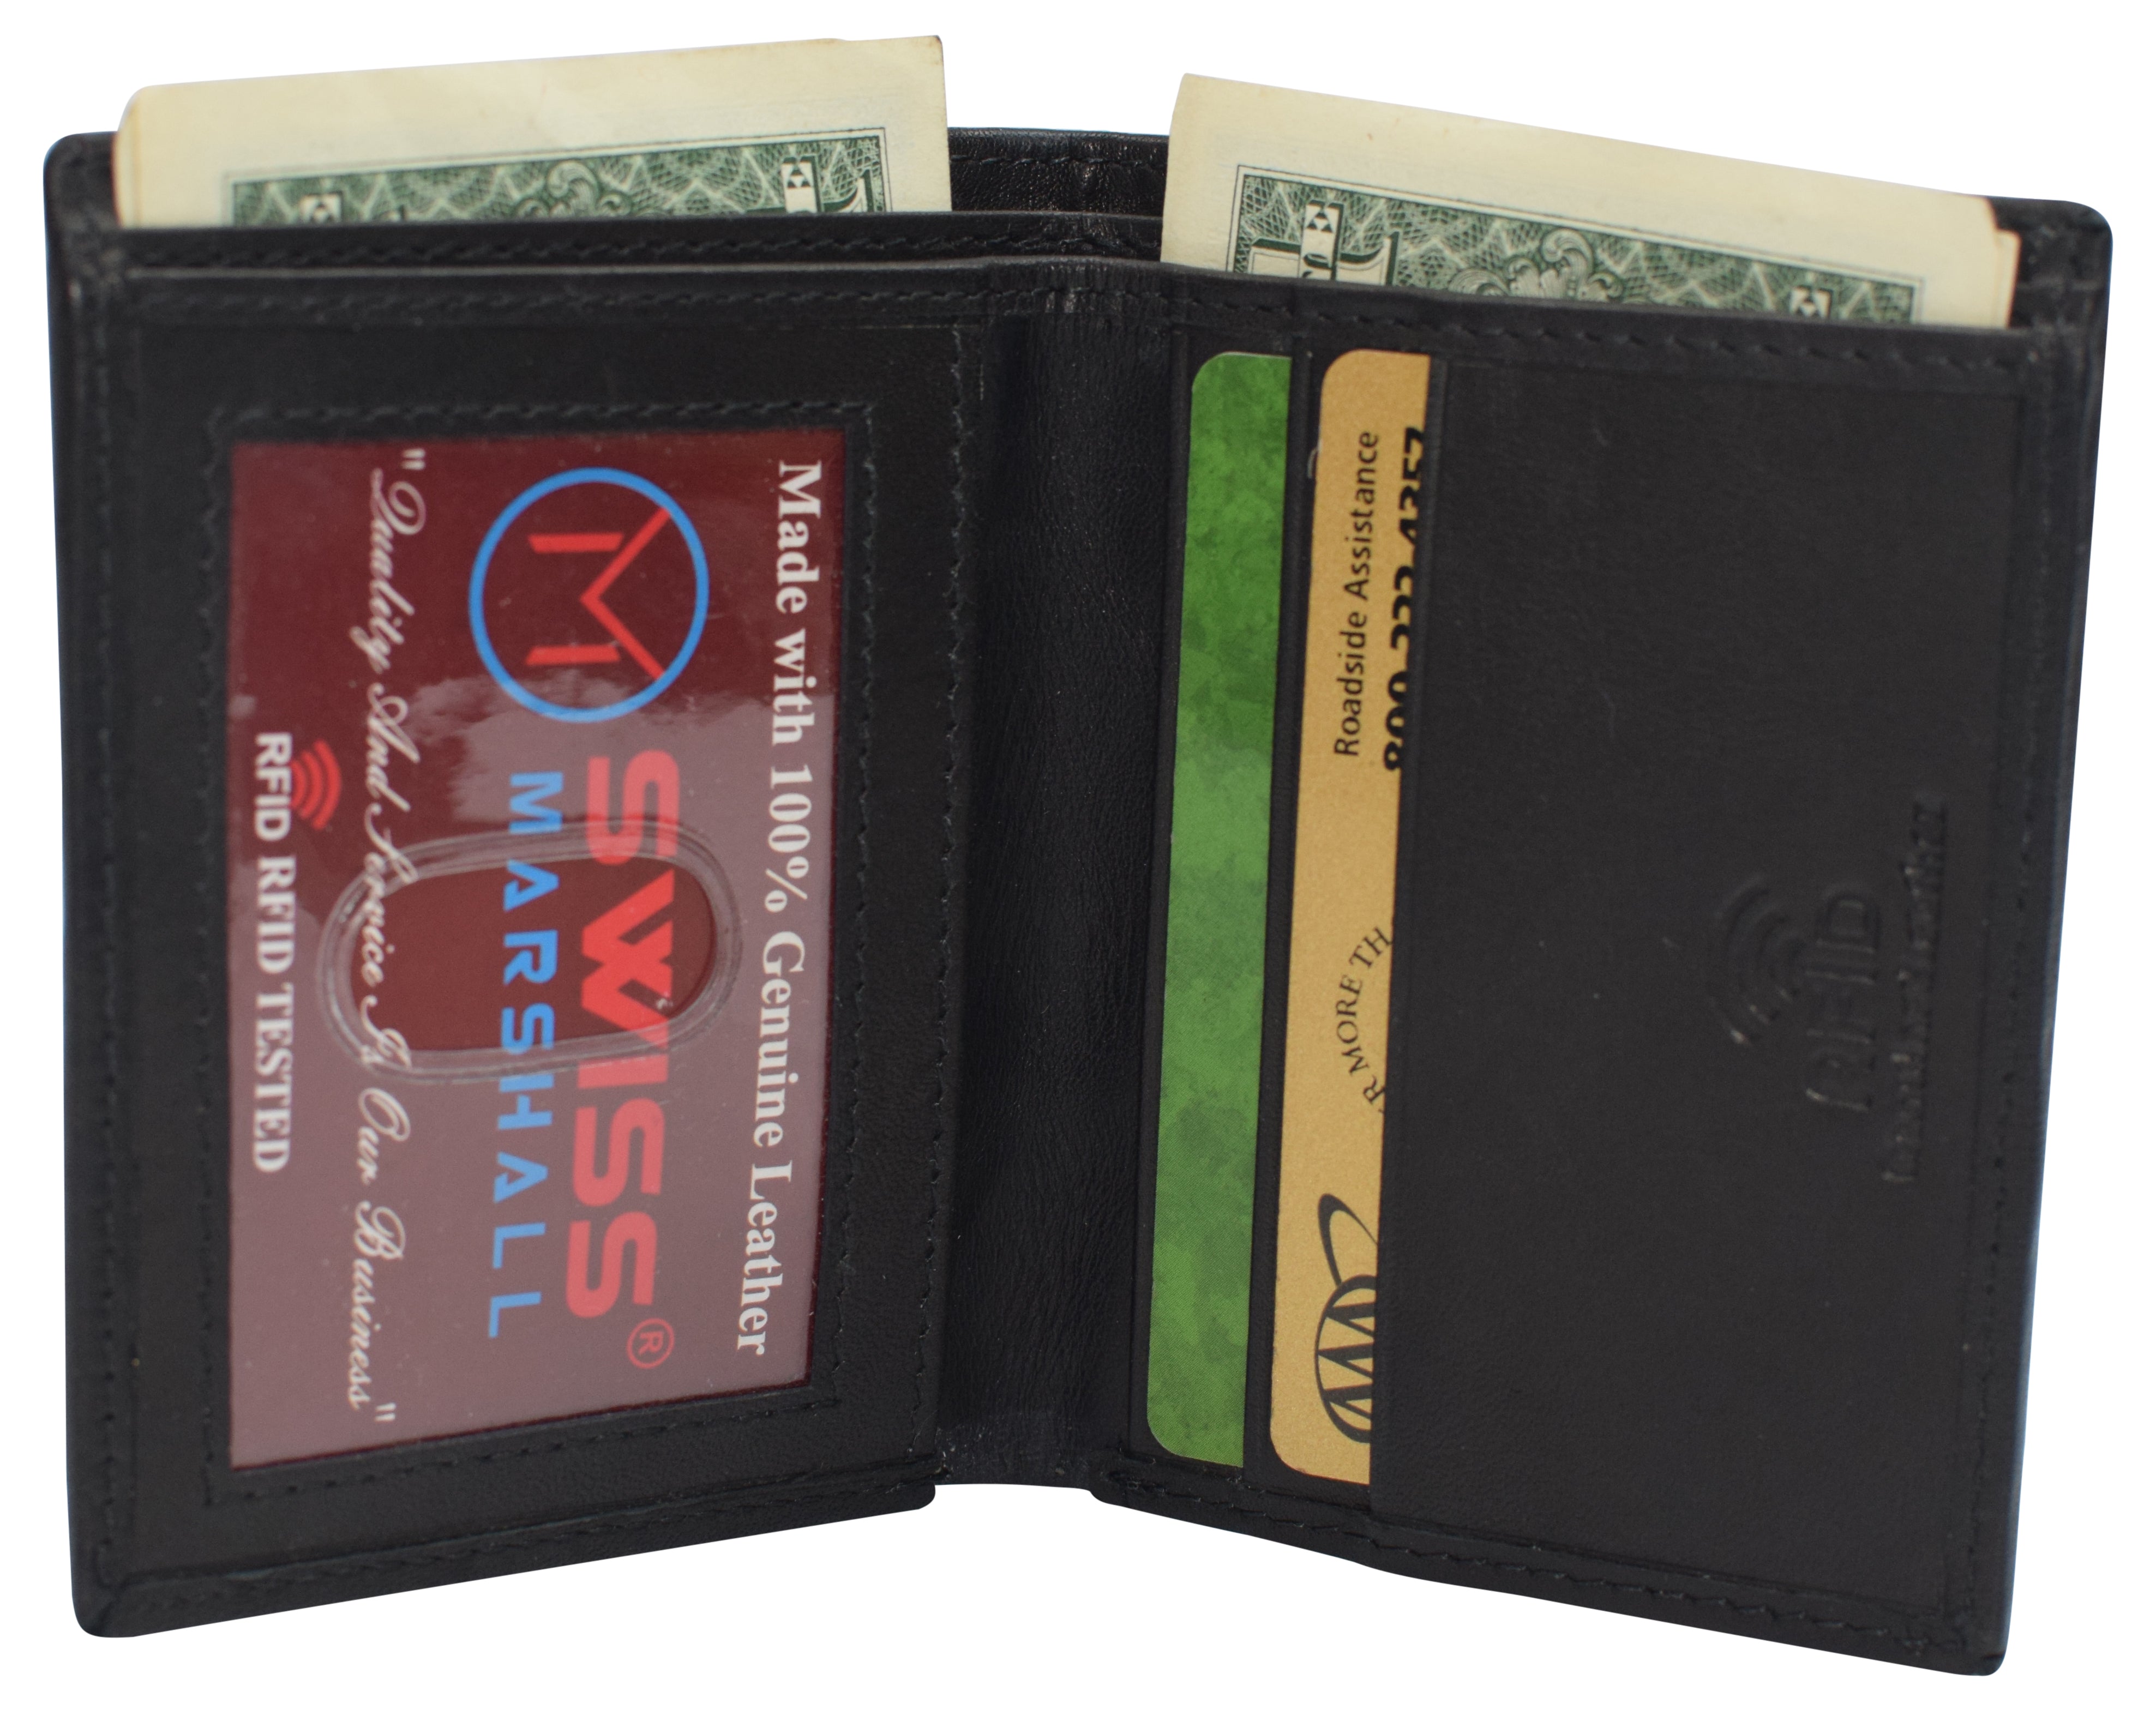 Genuine Leather Mens Long ID 19 Credit Card Security Wallet RFID